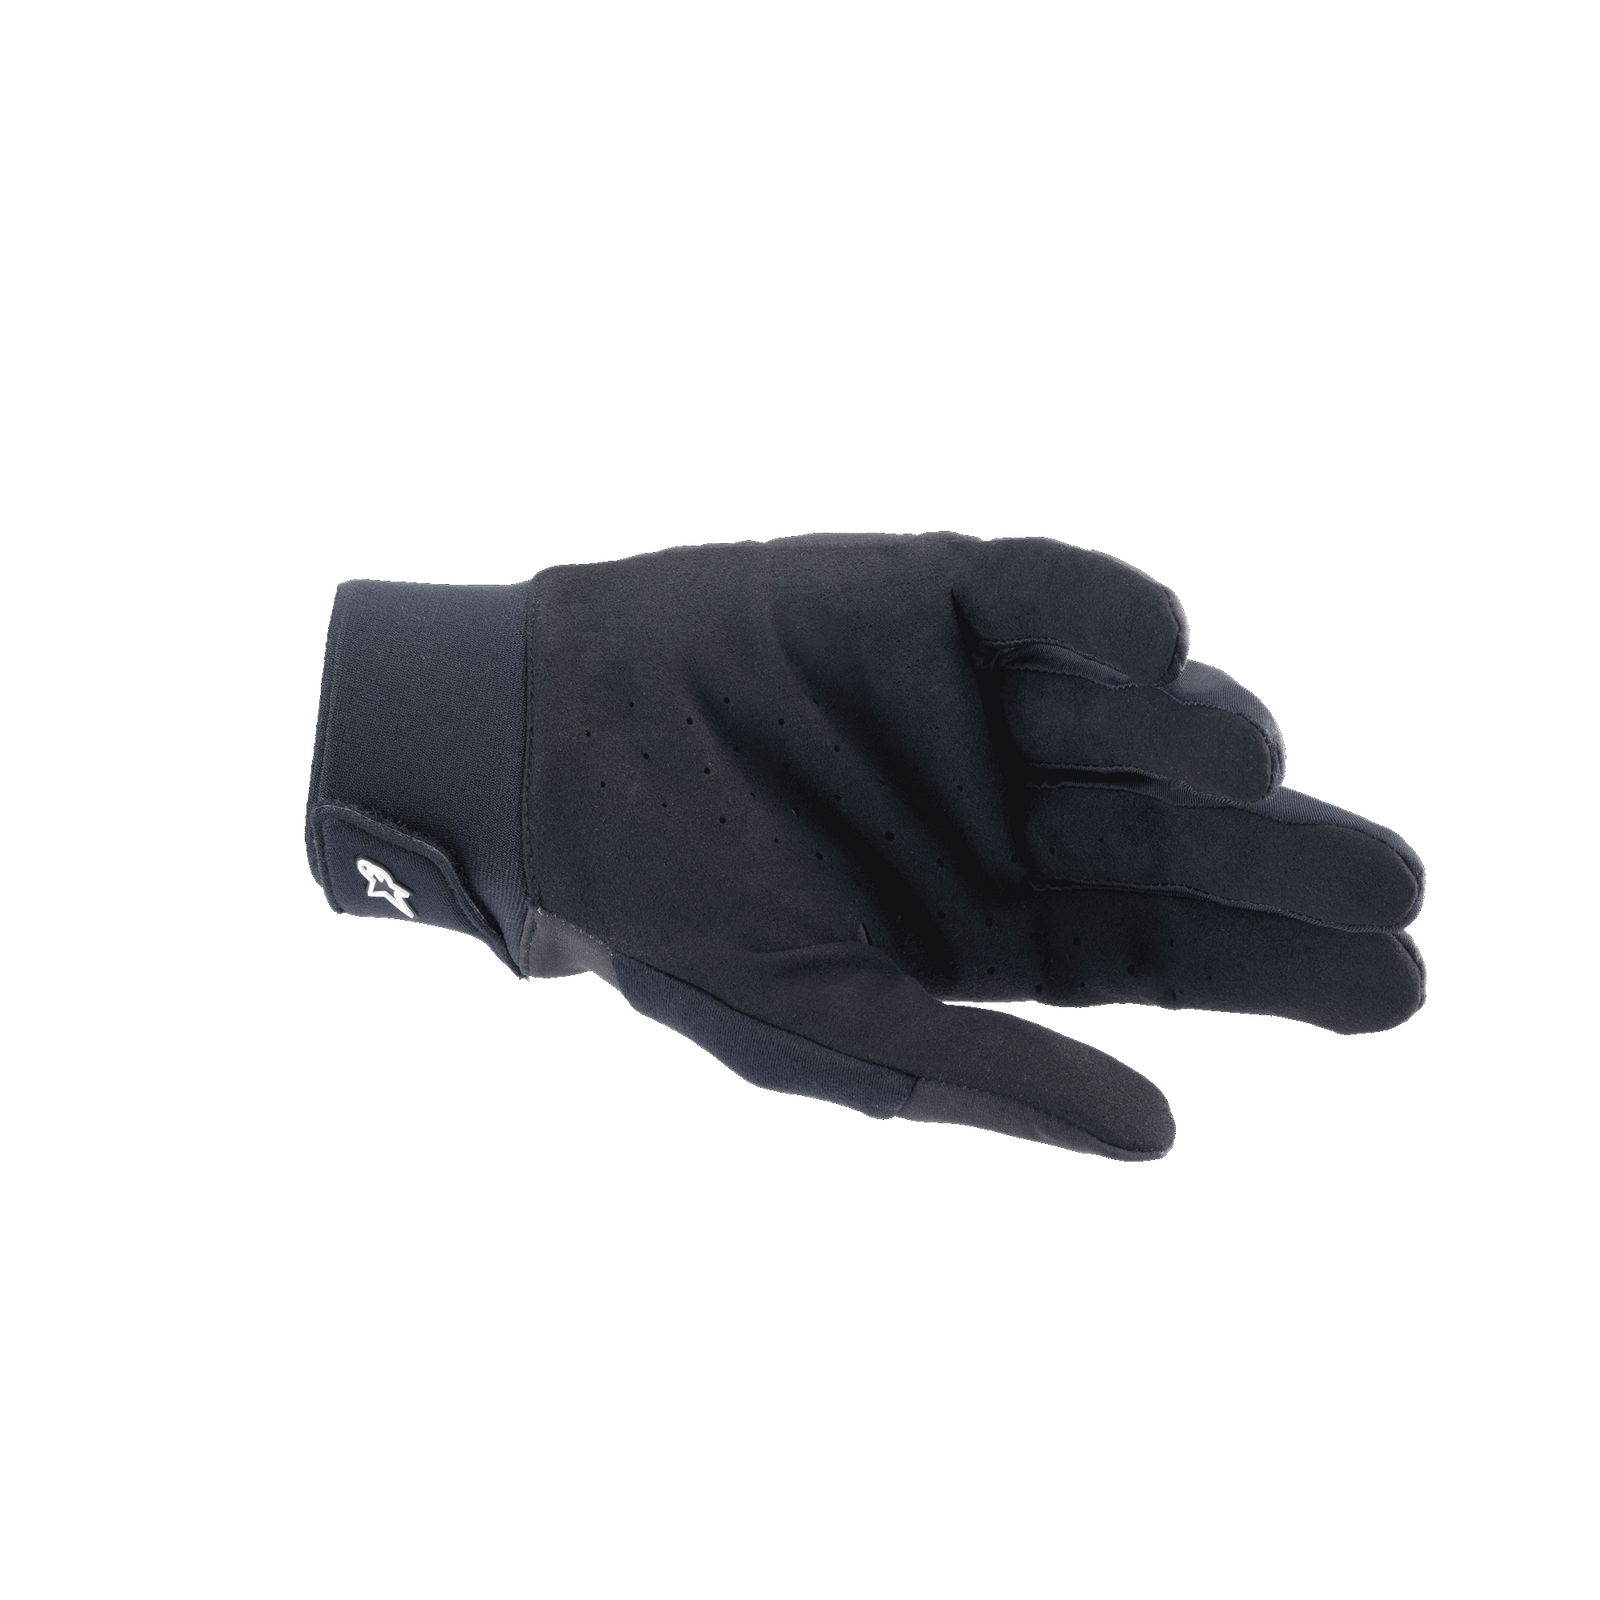 A-Supra Shield Gloves